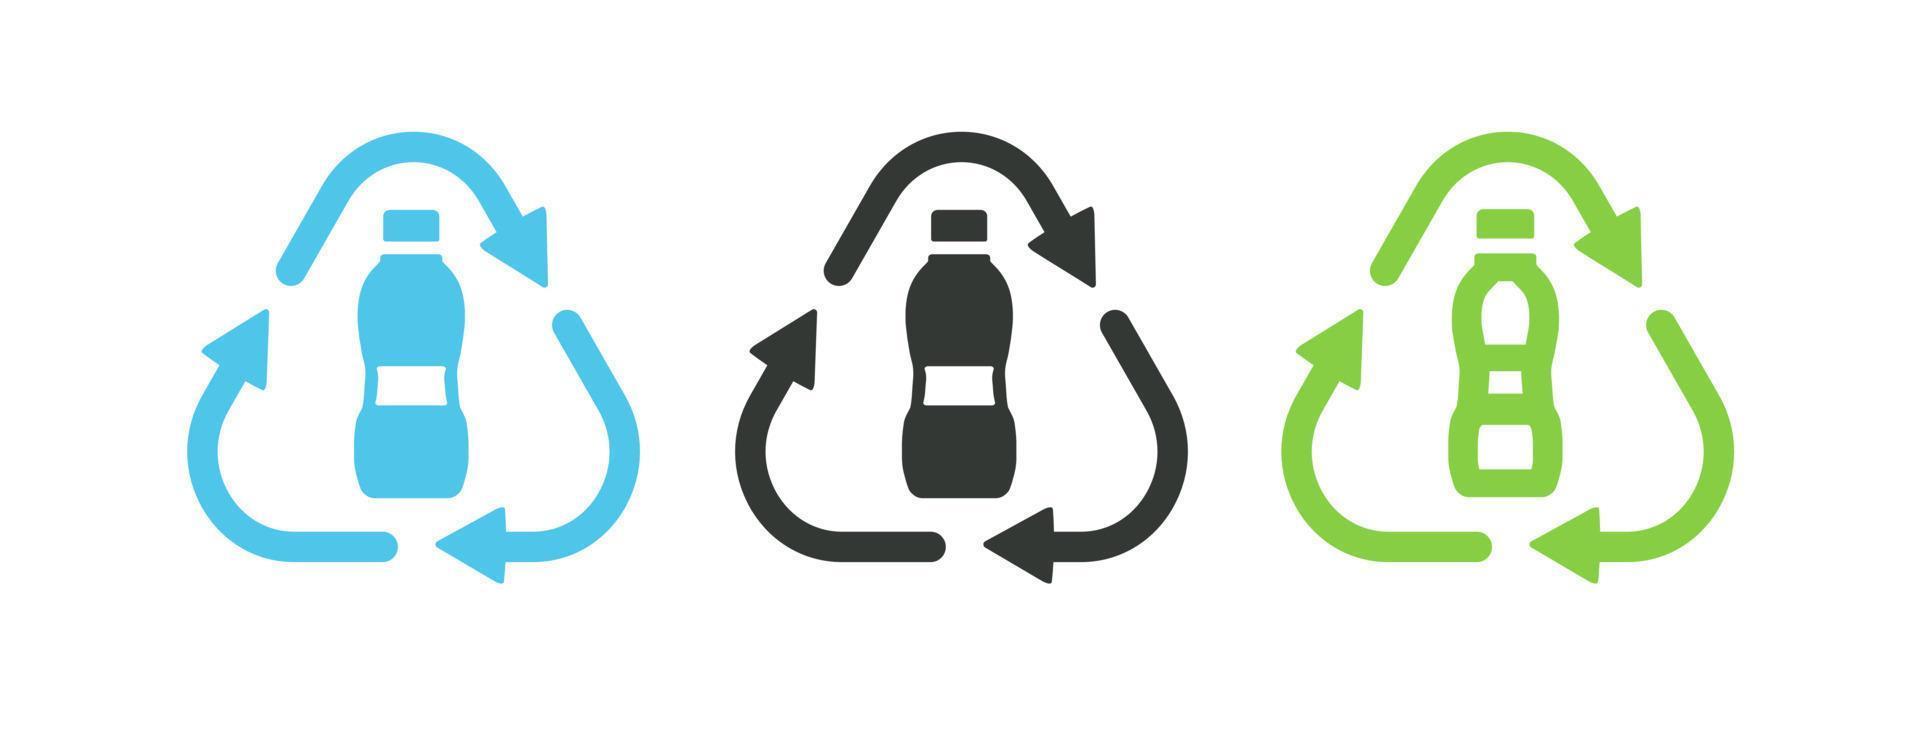 huisdier plastic fles recycle symbool vector